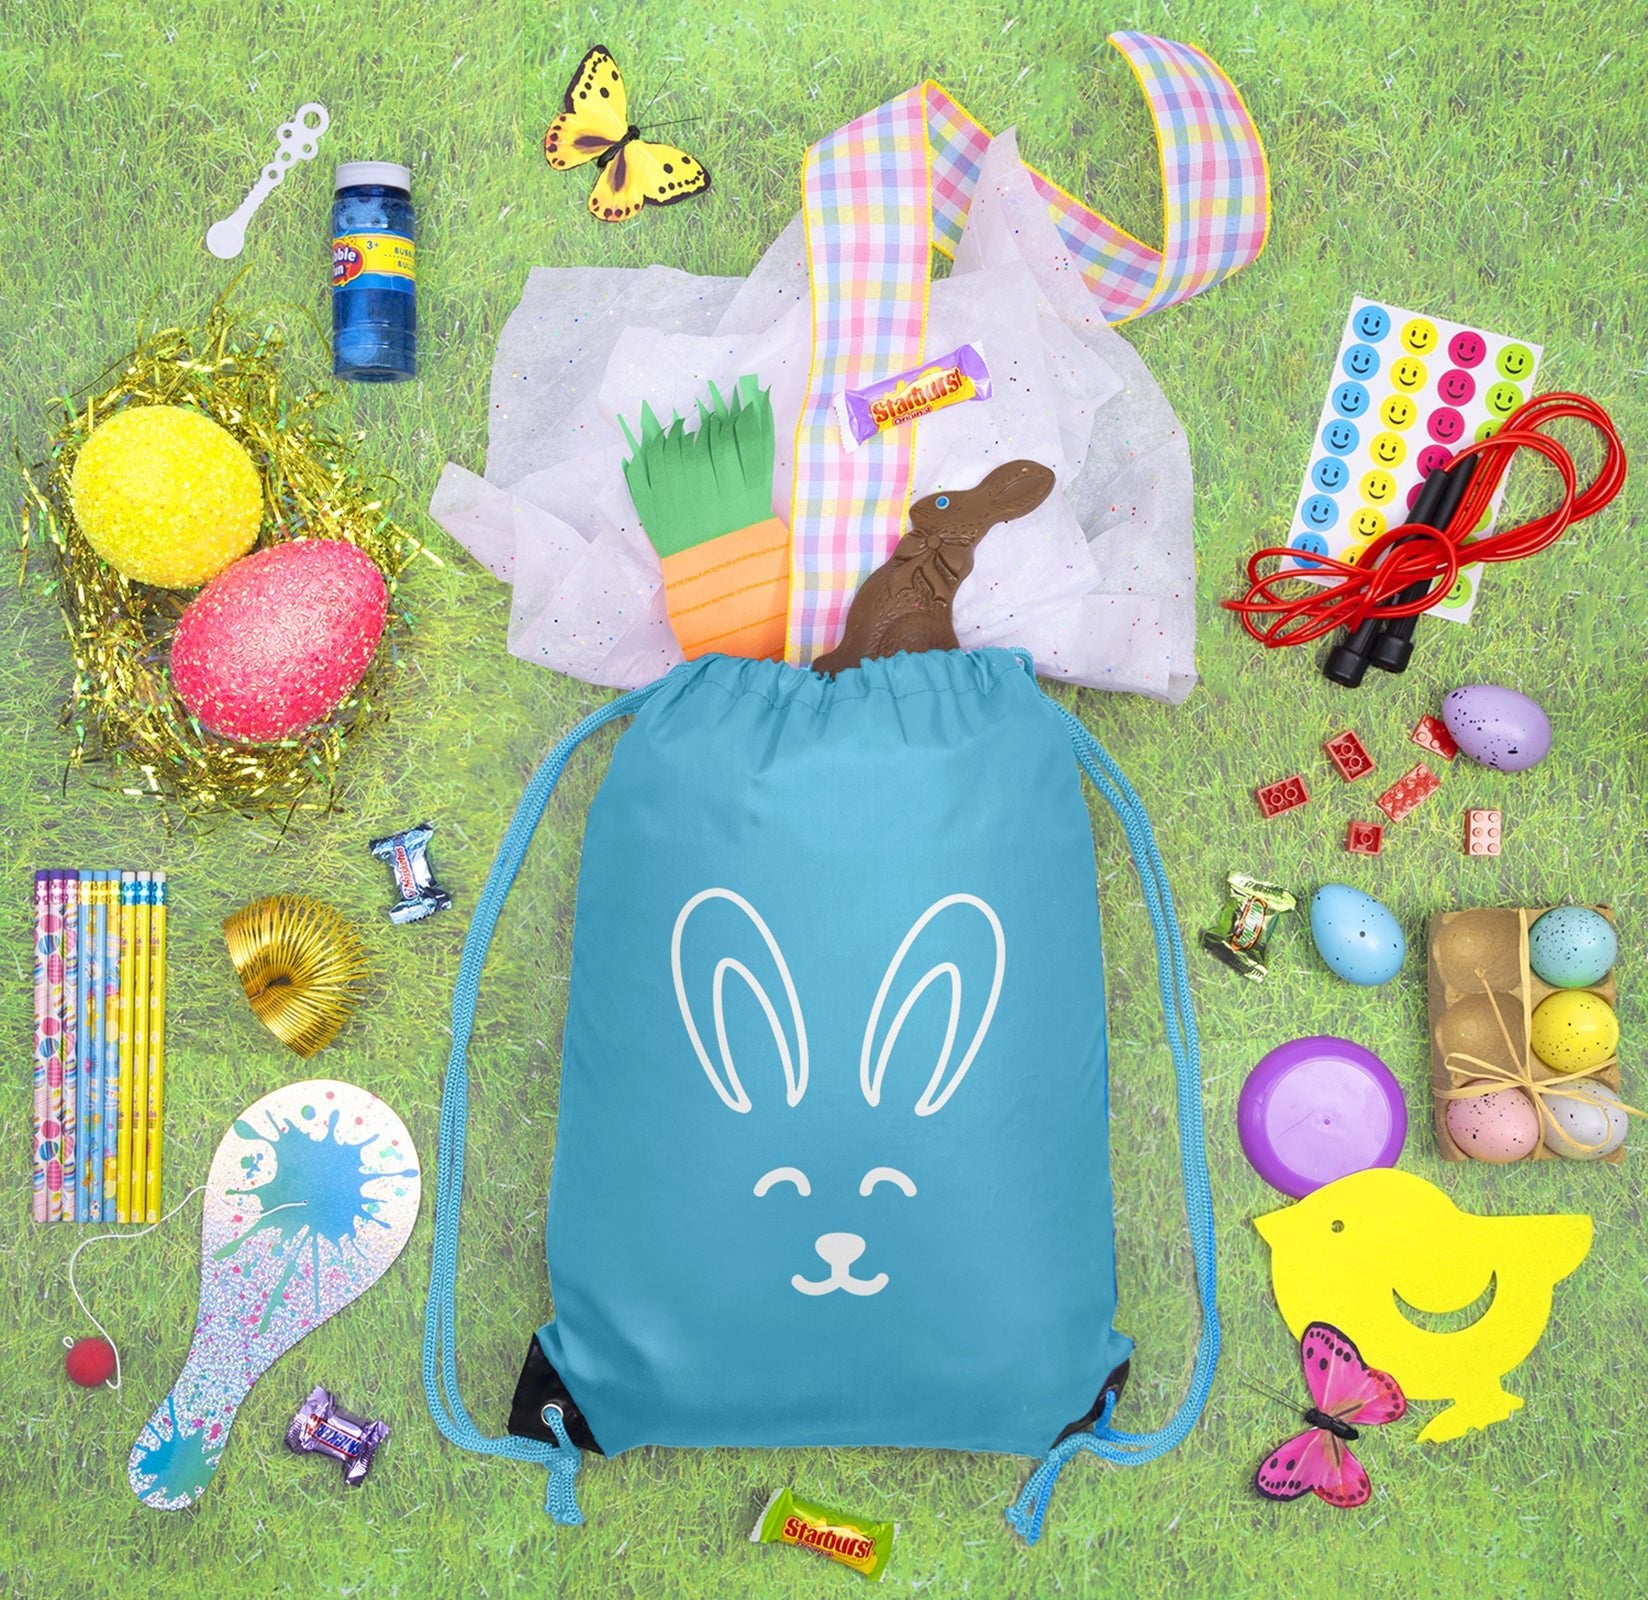 Smiling Bunny Easter Polyester Drawstring Bag - Mato & Hash